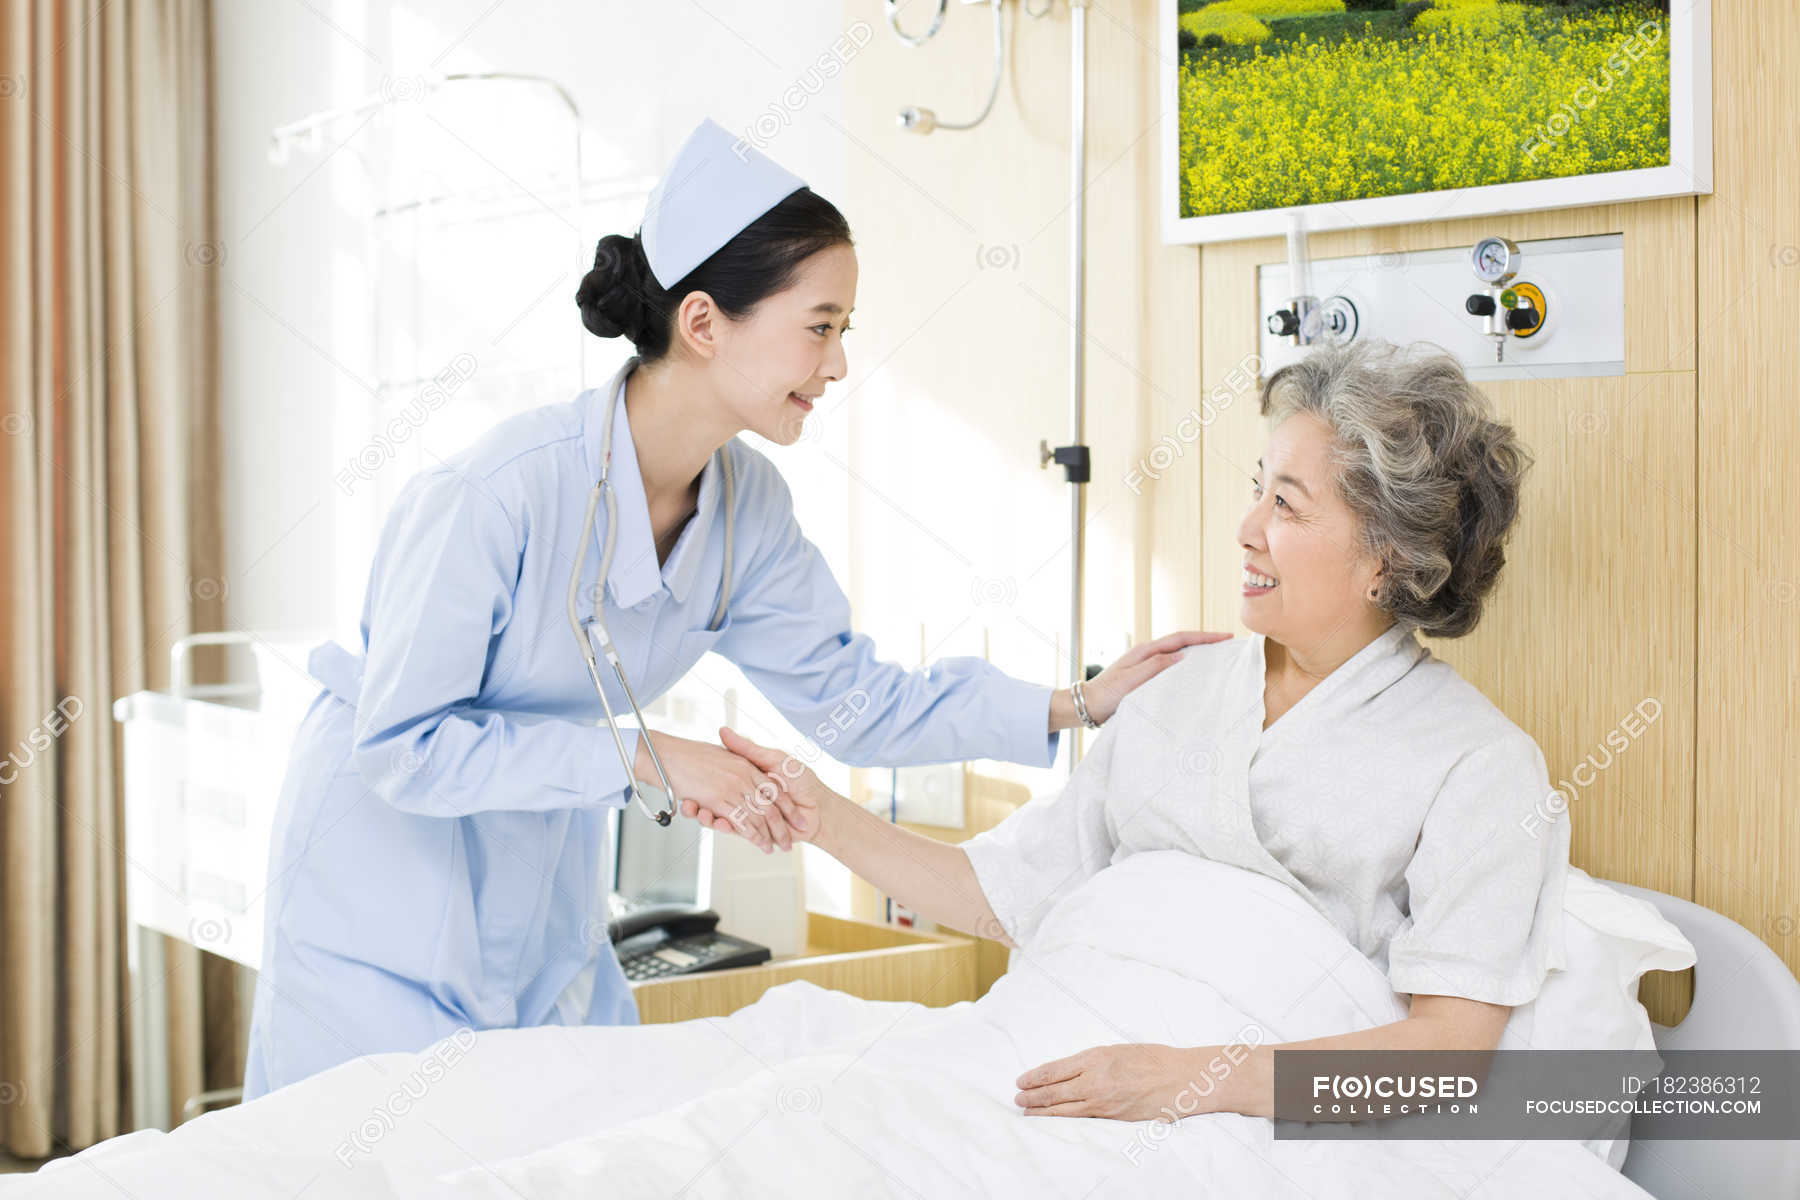 A Nurse Takes Care